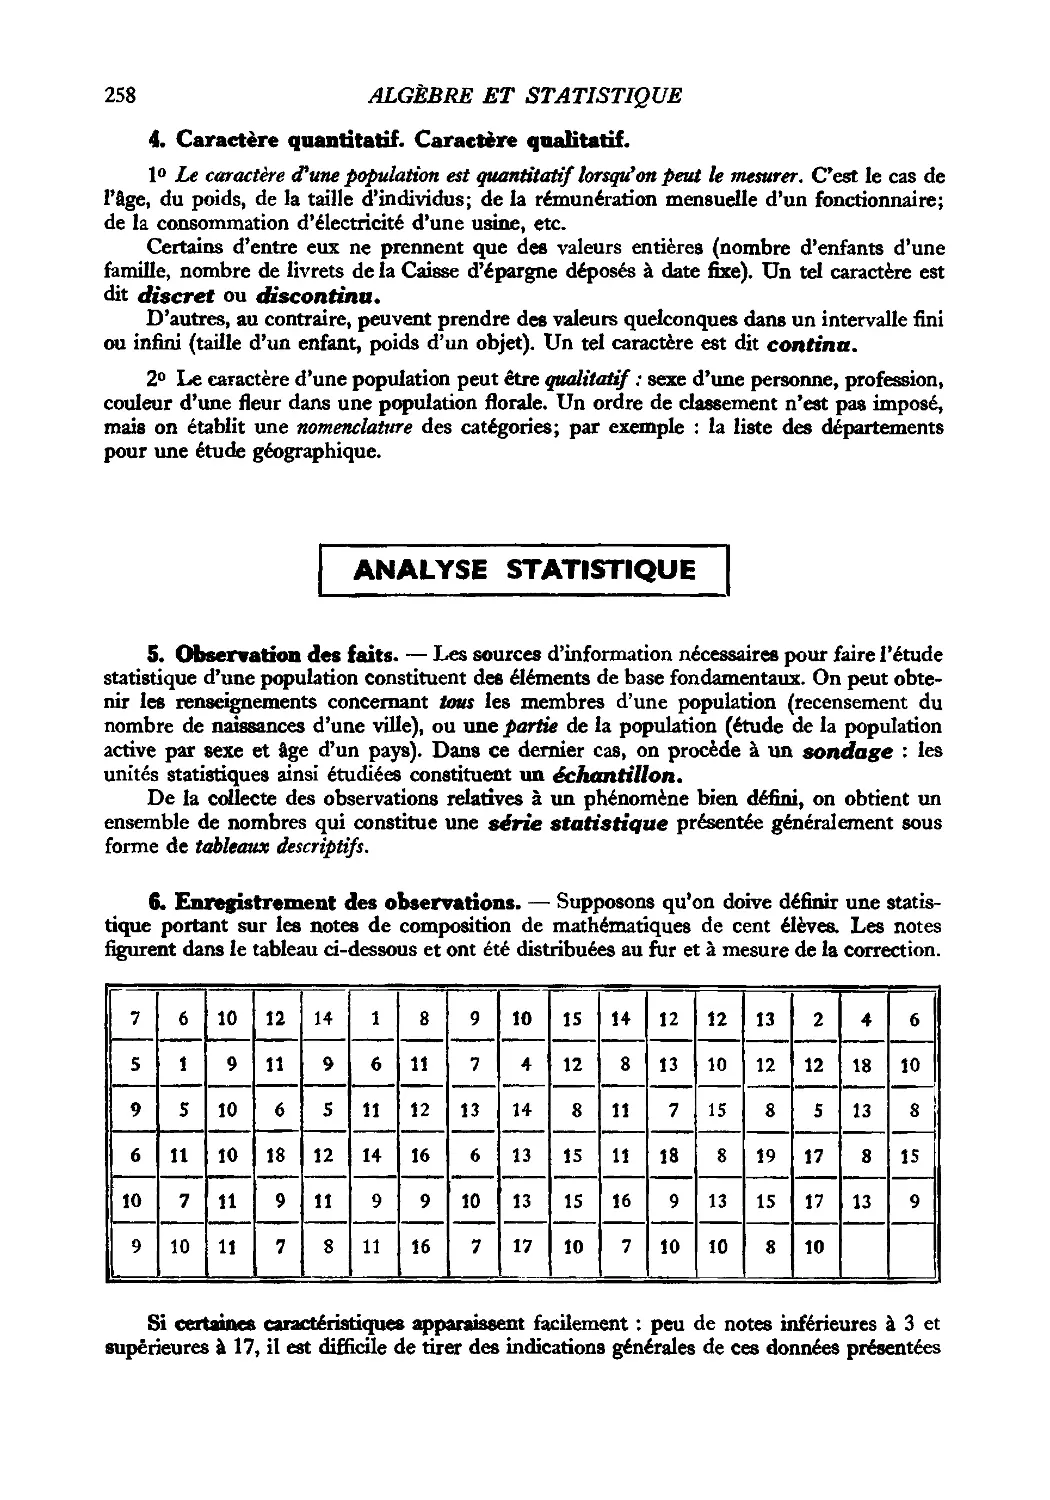 4. Caractère quantitatif. Caractère qualitatif
Analyse statistique
6. Enregistrement des observations